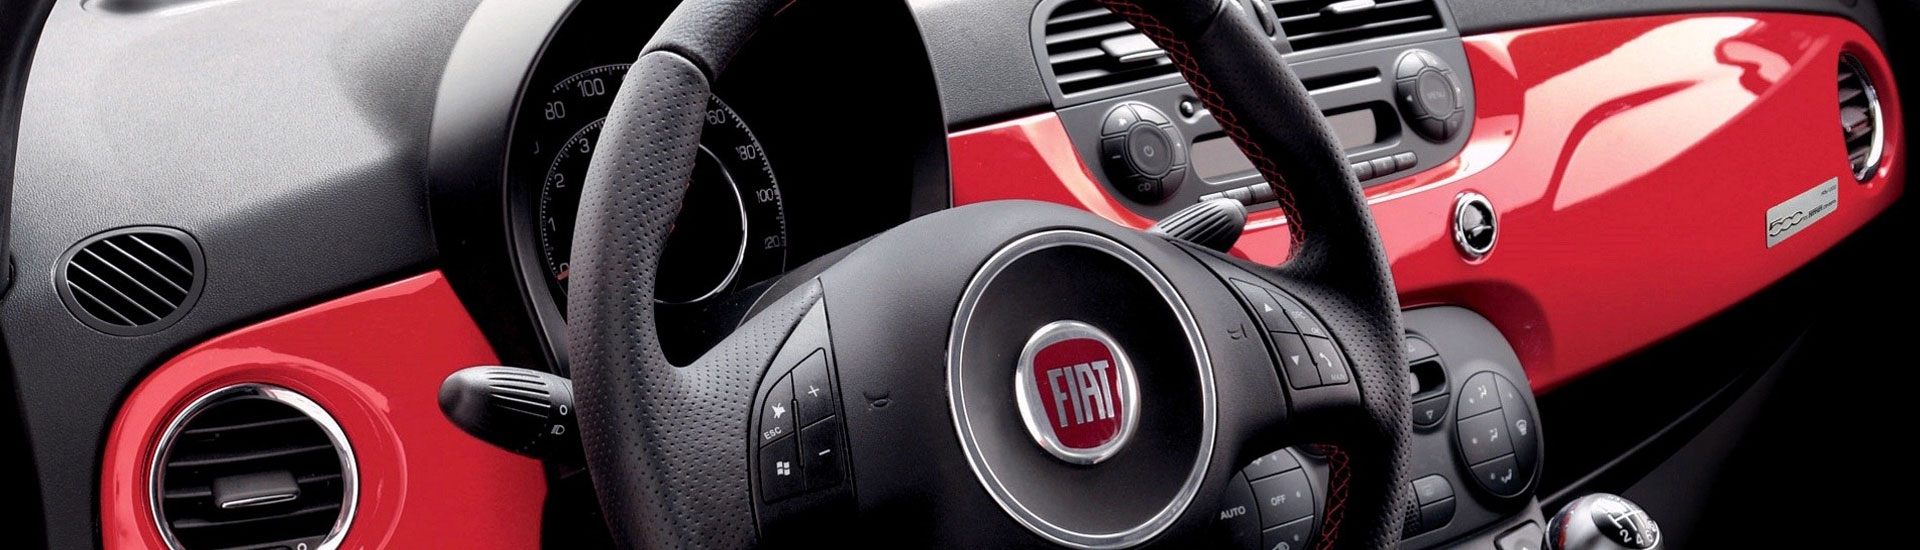 2015 Fiat 500 Custom Dash Kits